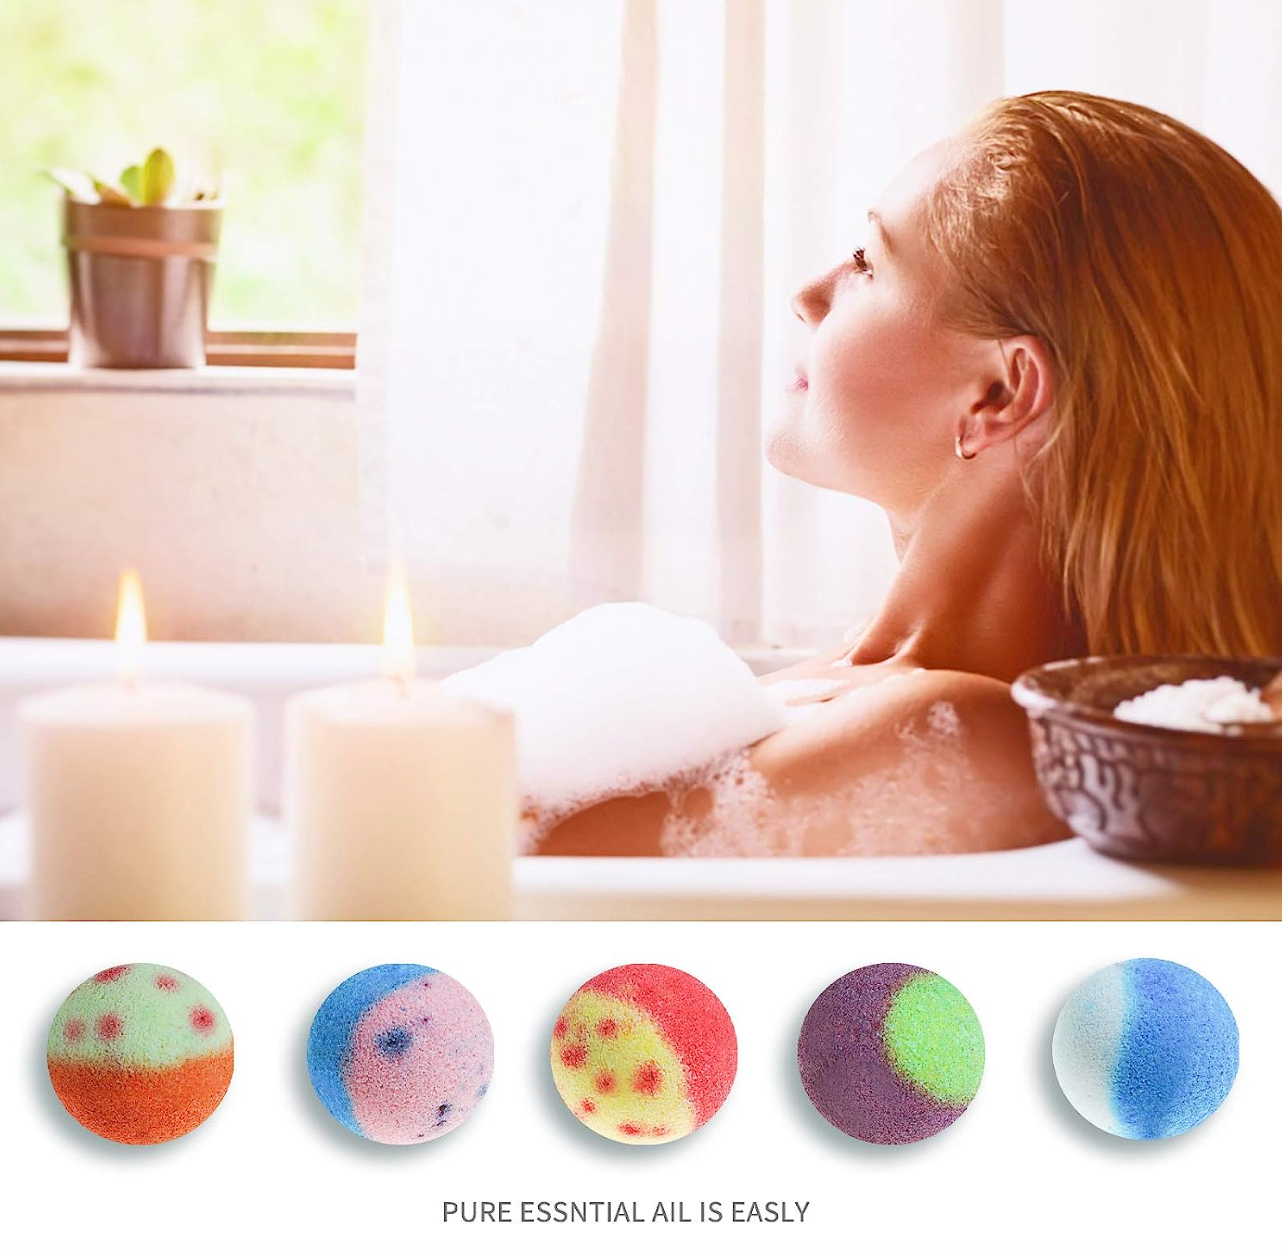 Nagaliving Bath Bombs Gift Set, 10 Organic Bubble Bath Bombs, Bath Gift for Valentine’s Day, Christmas